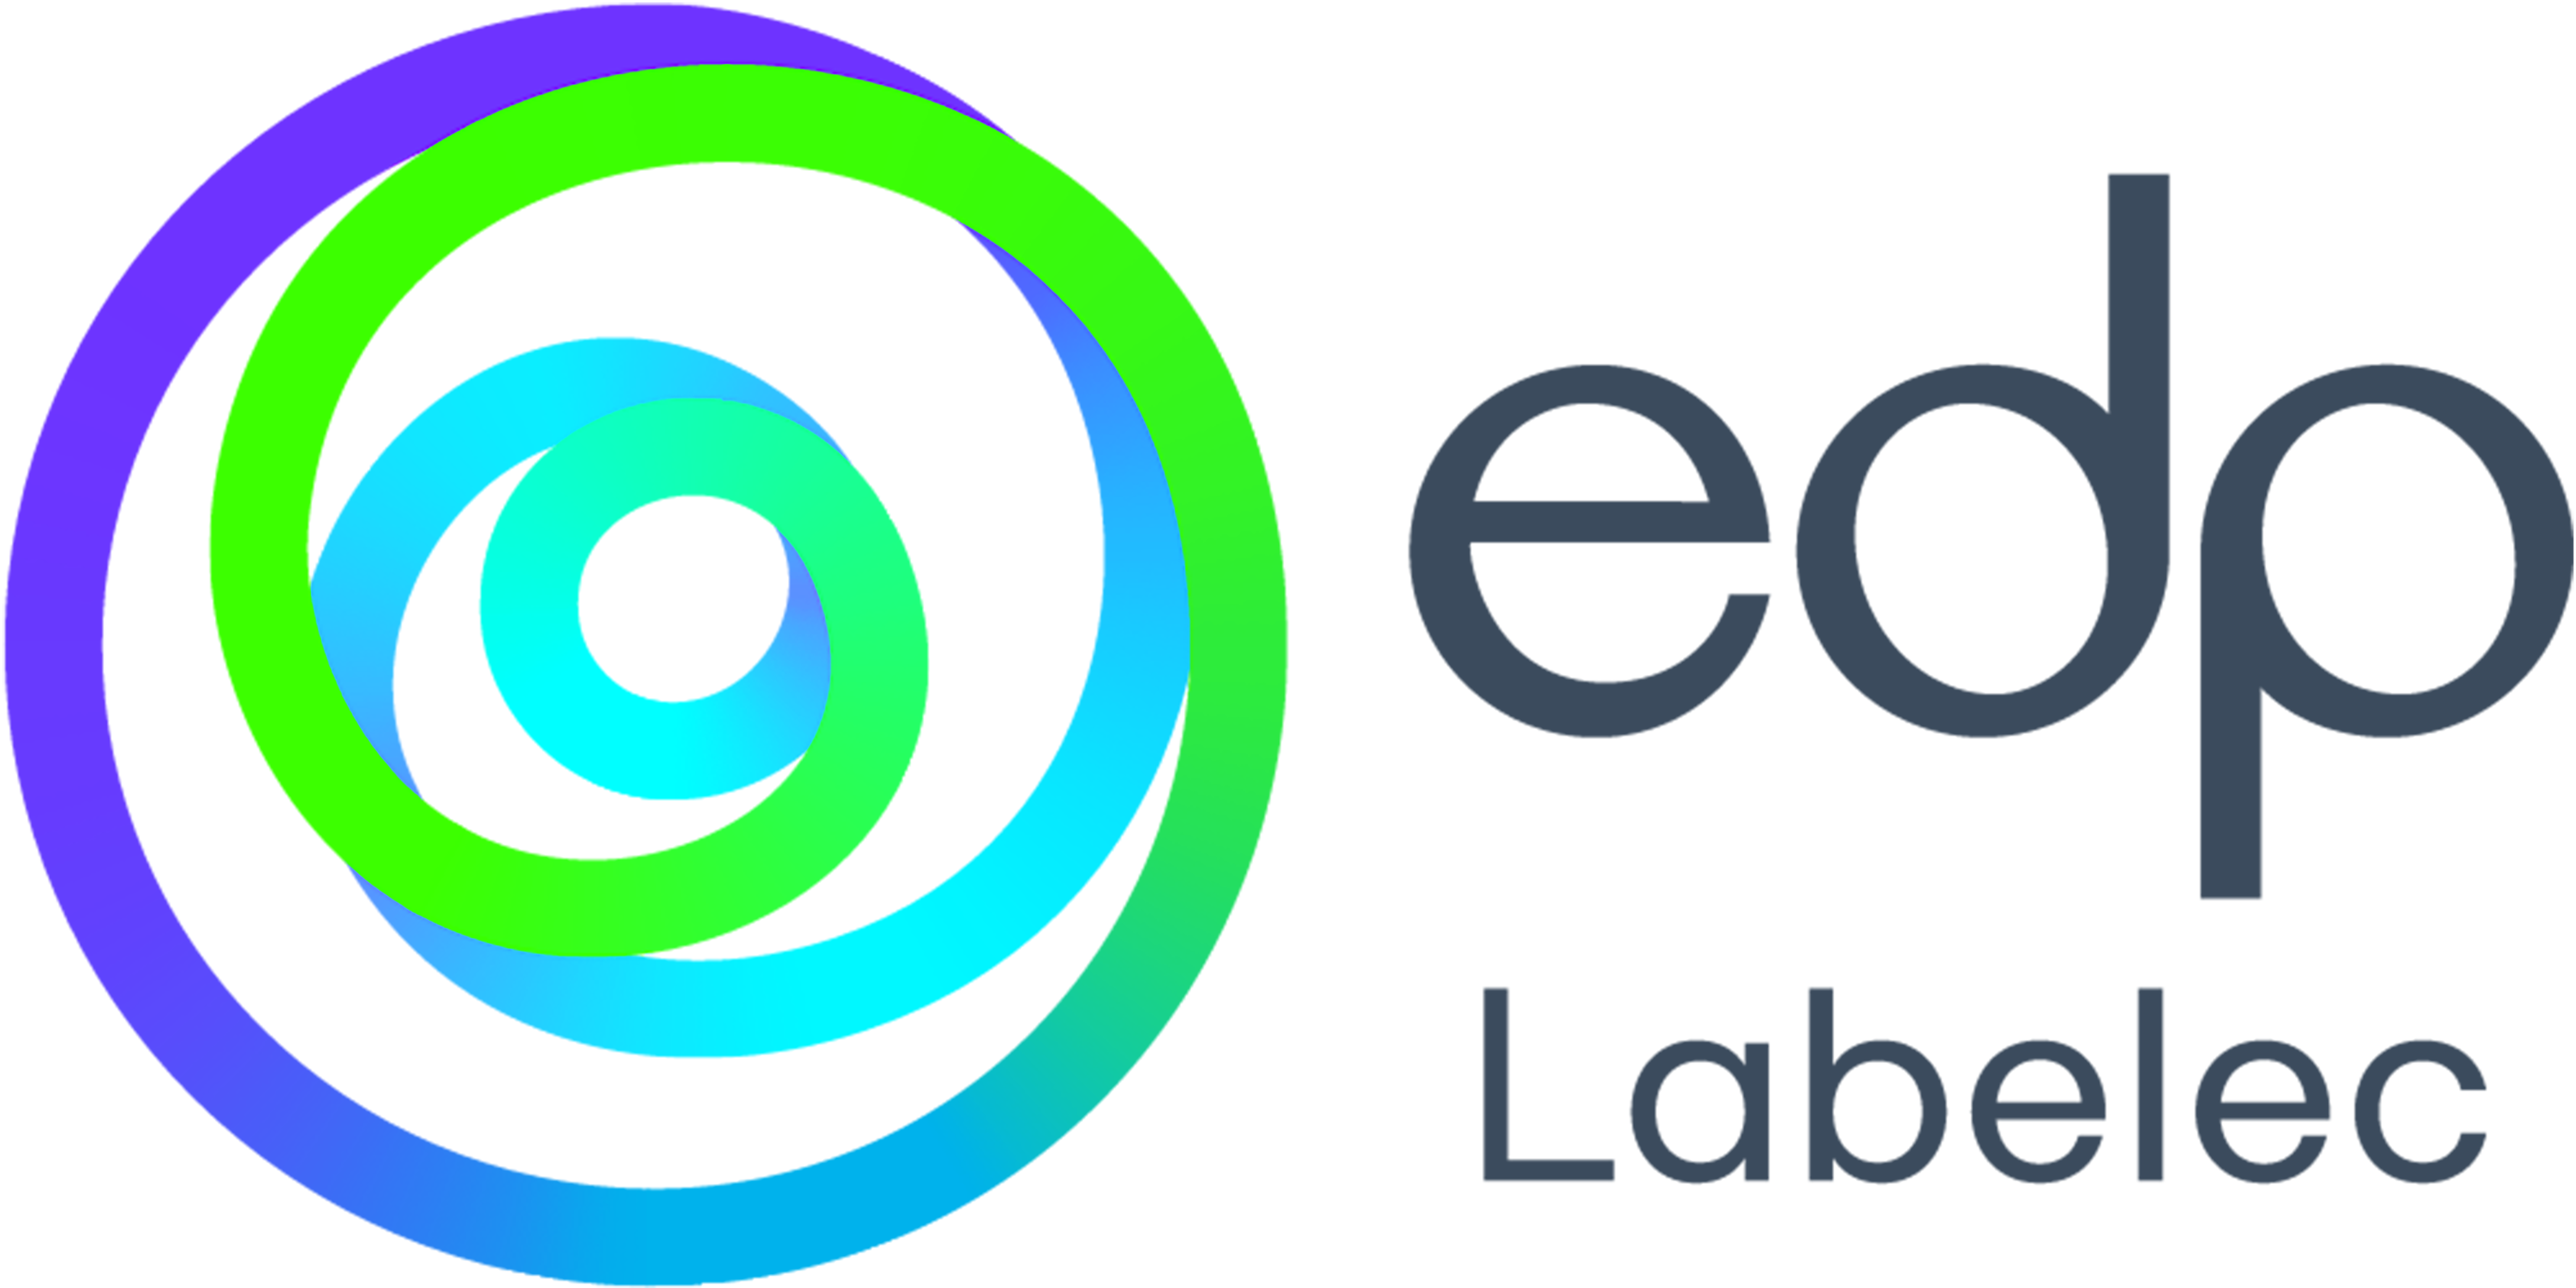 Labelec - Estudos, Desenvolvimento E Actividades Laboratoriais, Sa